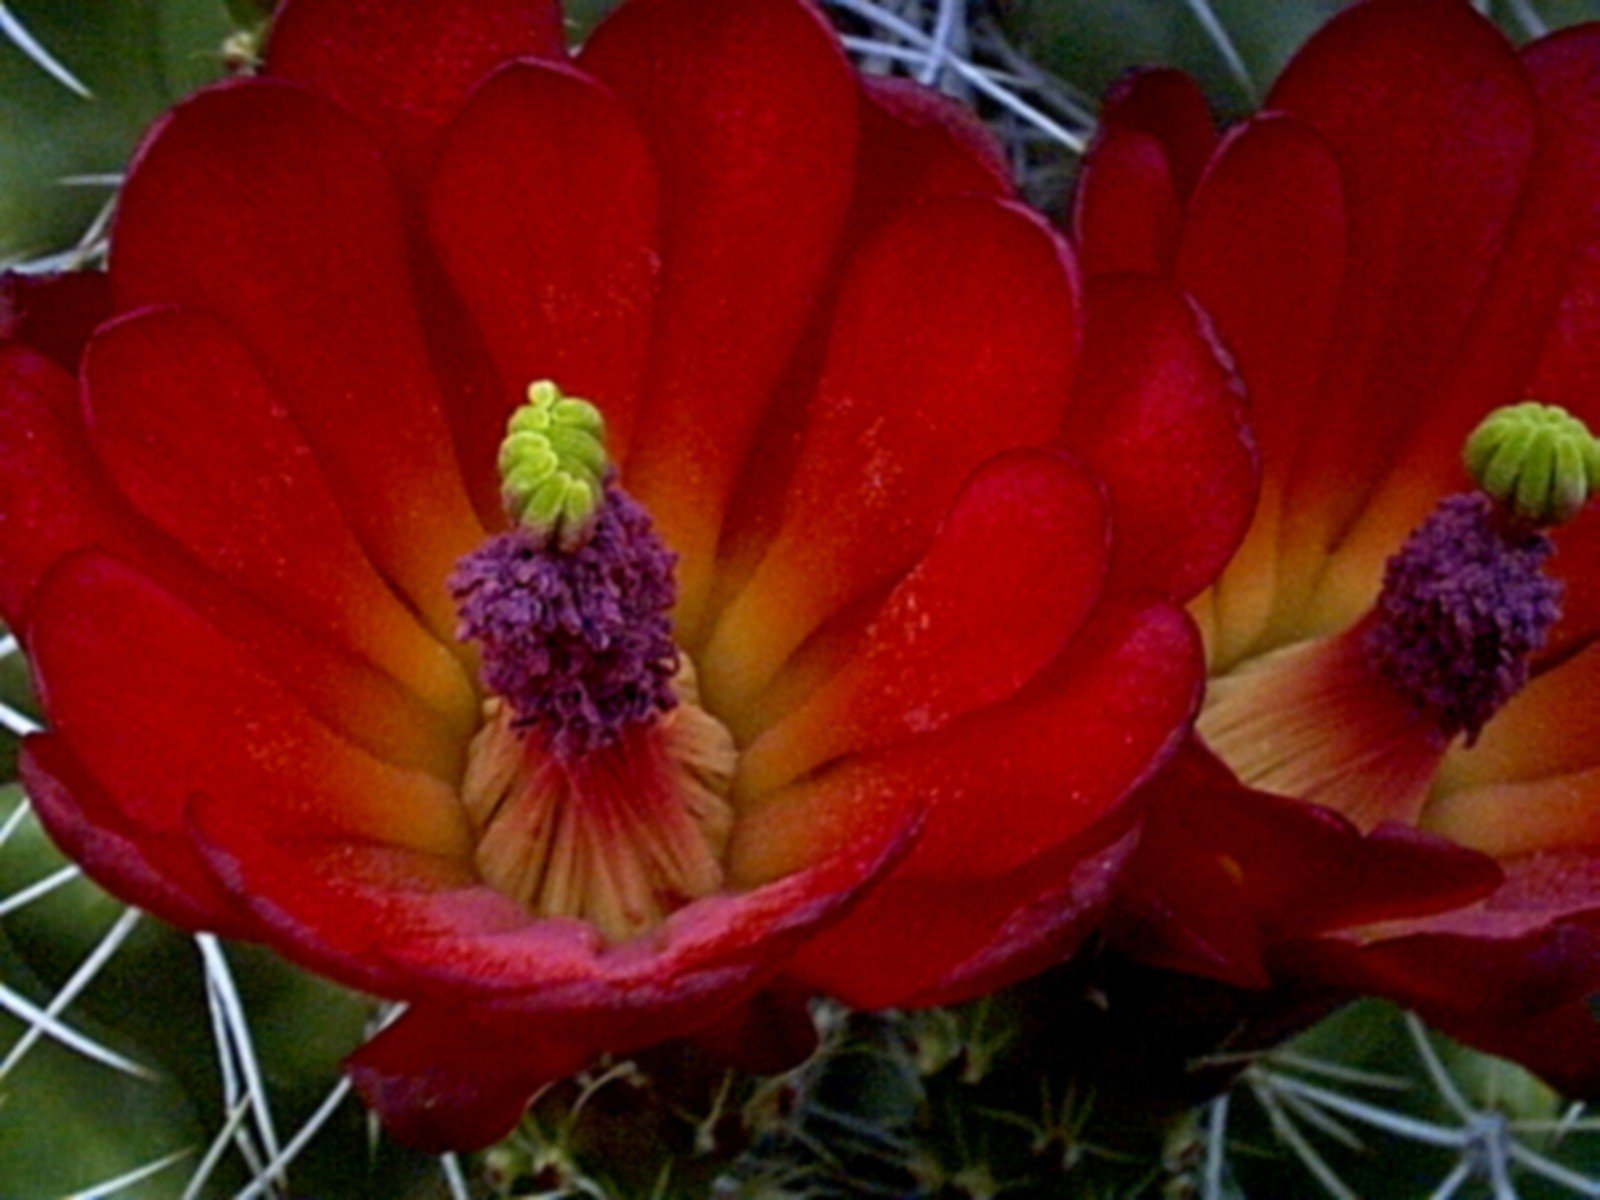 Red Cactus Flower by DragonJr on DeviantArt